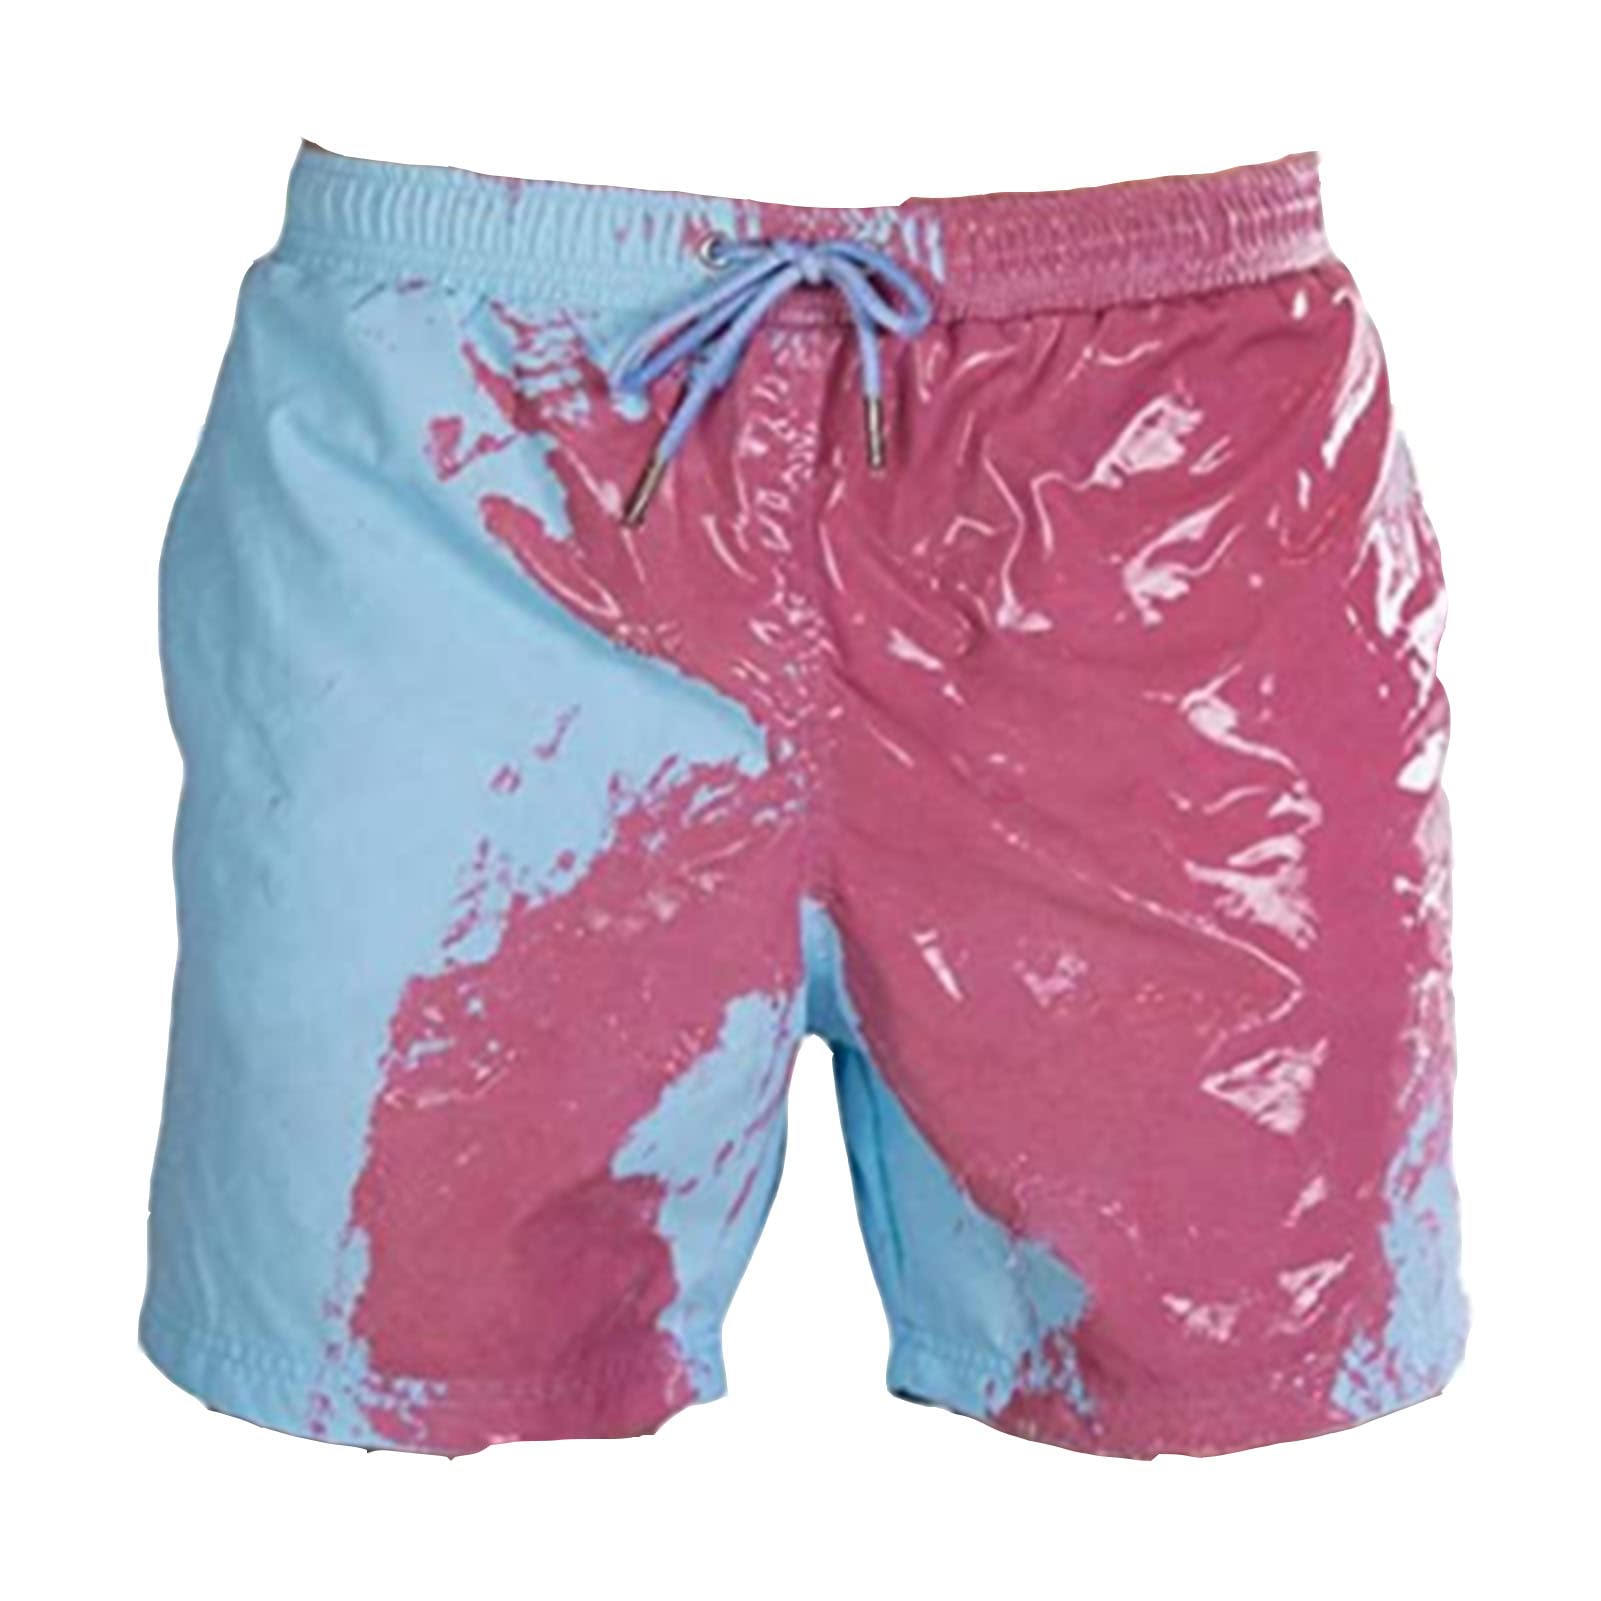 Men's Sports Quick Dry Temperature Sensitive Color Changing Swim Trunks